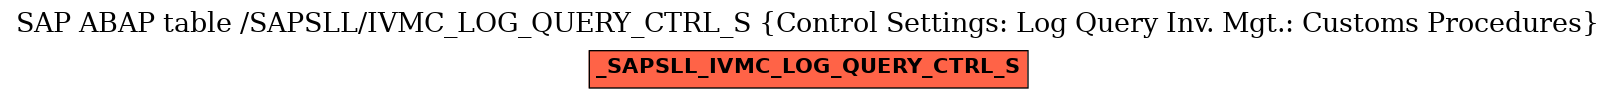 E-R Diagram for table /SAPSLL/IVMC_LOG_QUERY_CTRL_S (Control Settings: Log Query Inv. Mgt.: Customs Procedures)